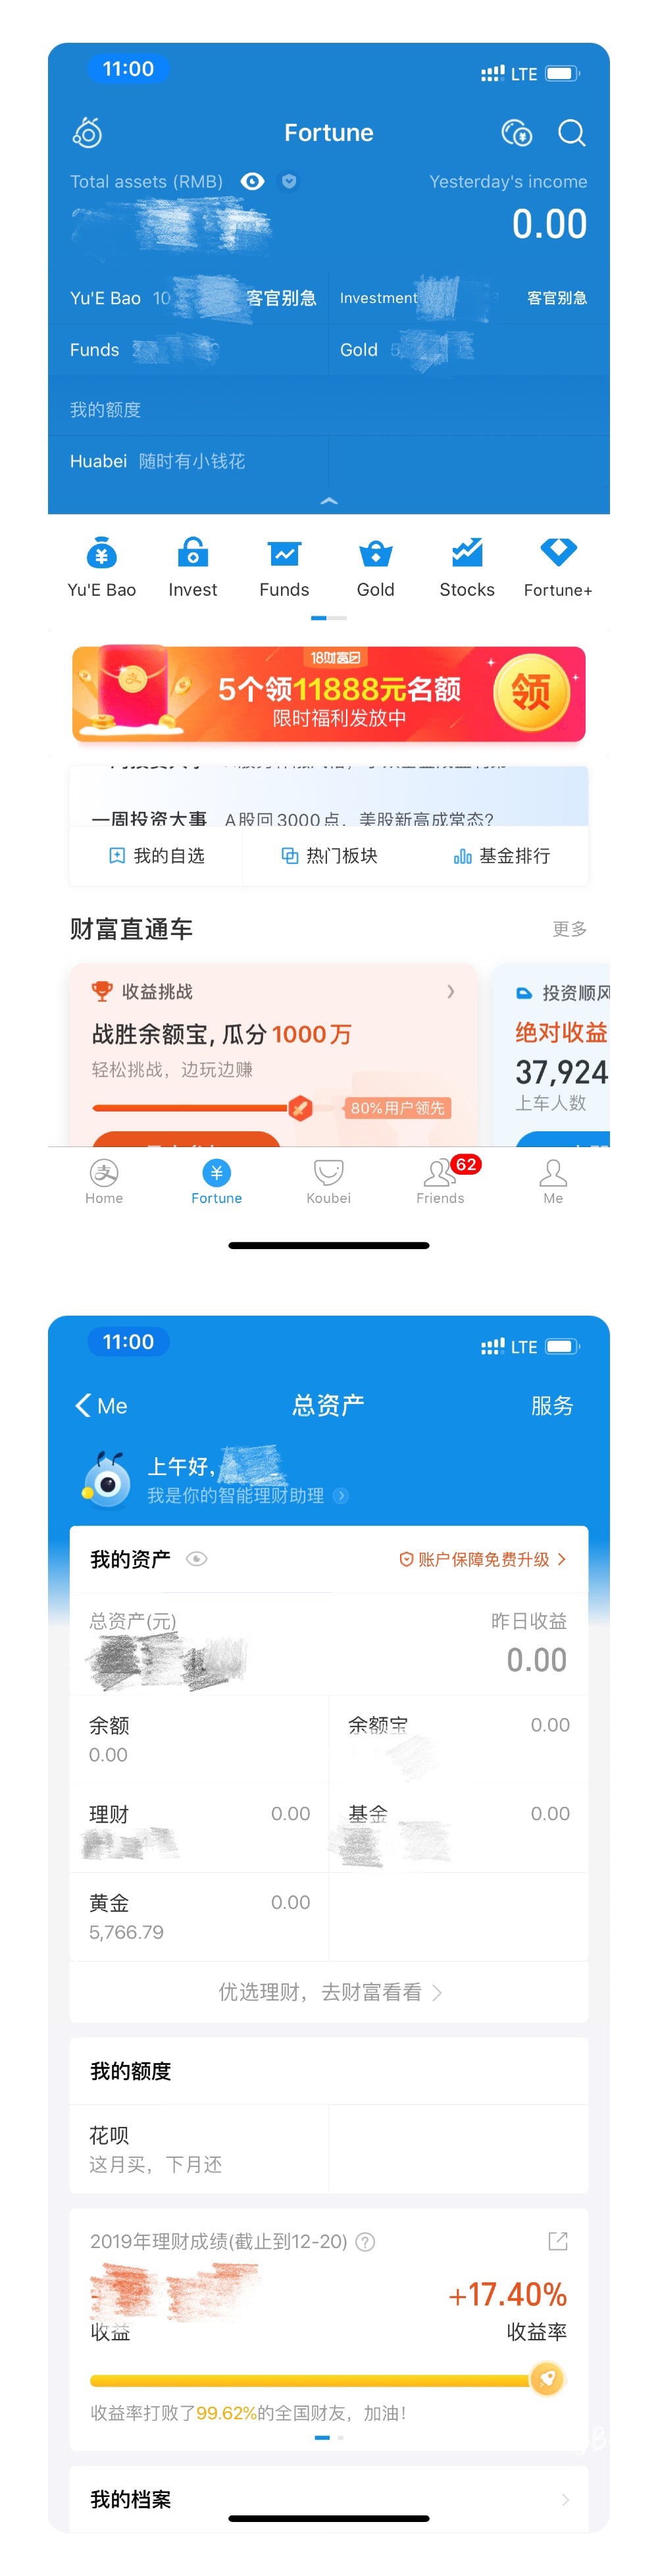 Alipay’s Yu’er Bao and Fund Market